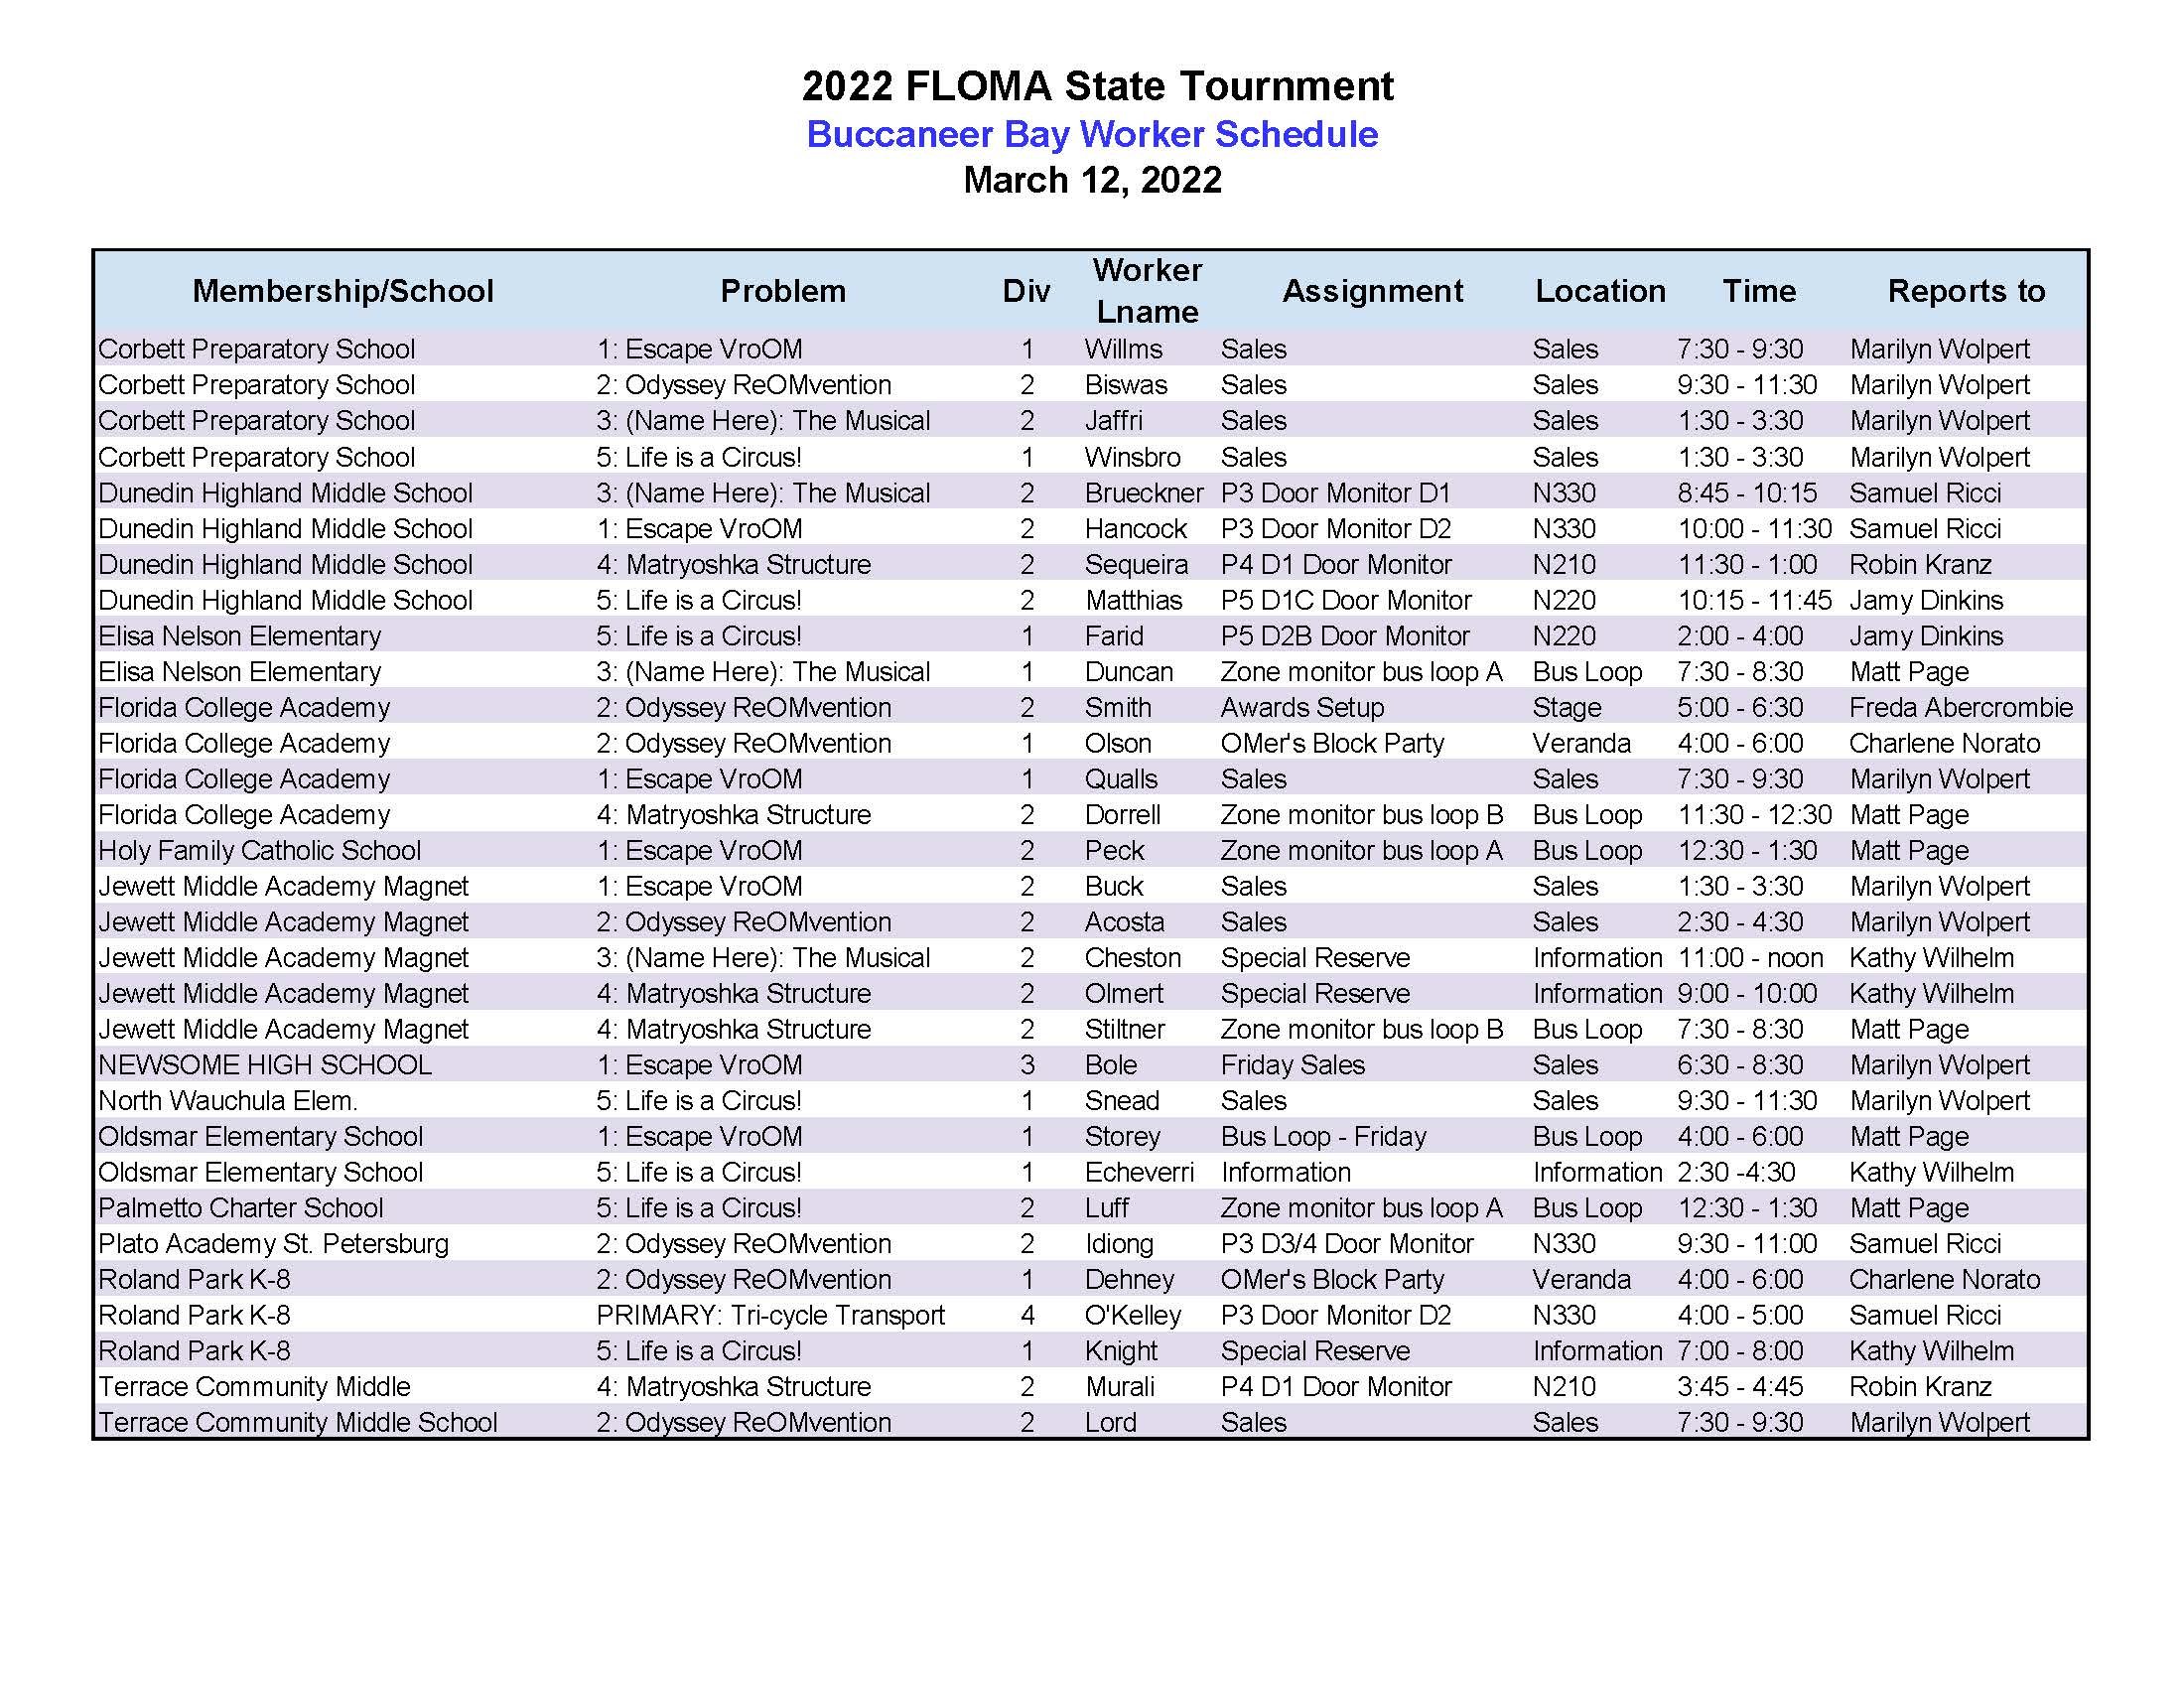 2022 FLOMA State Tournament Worker Schedule